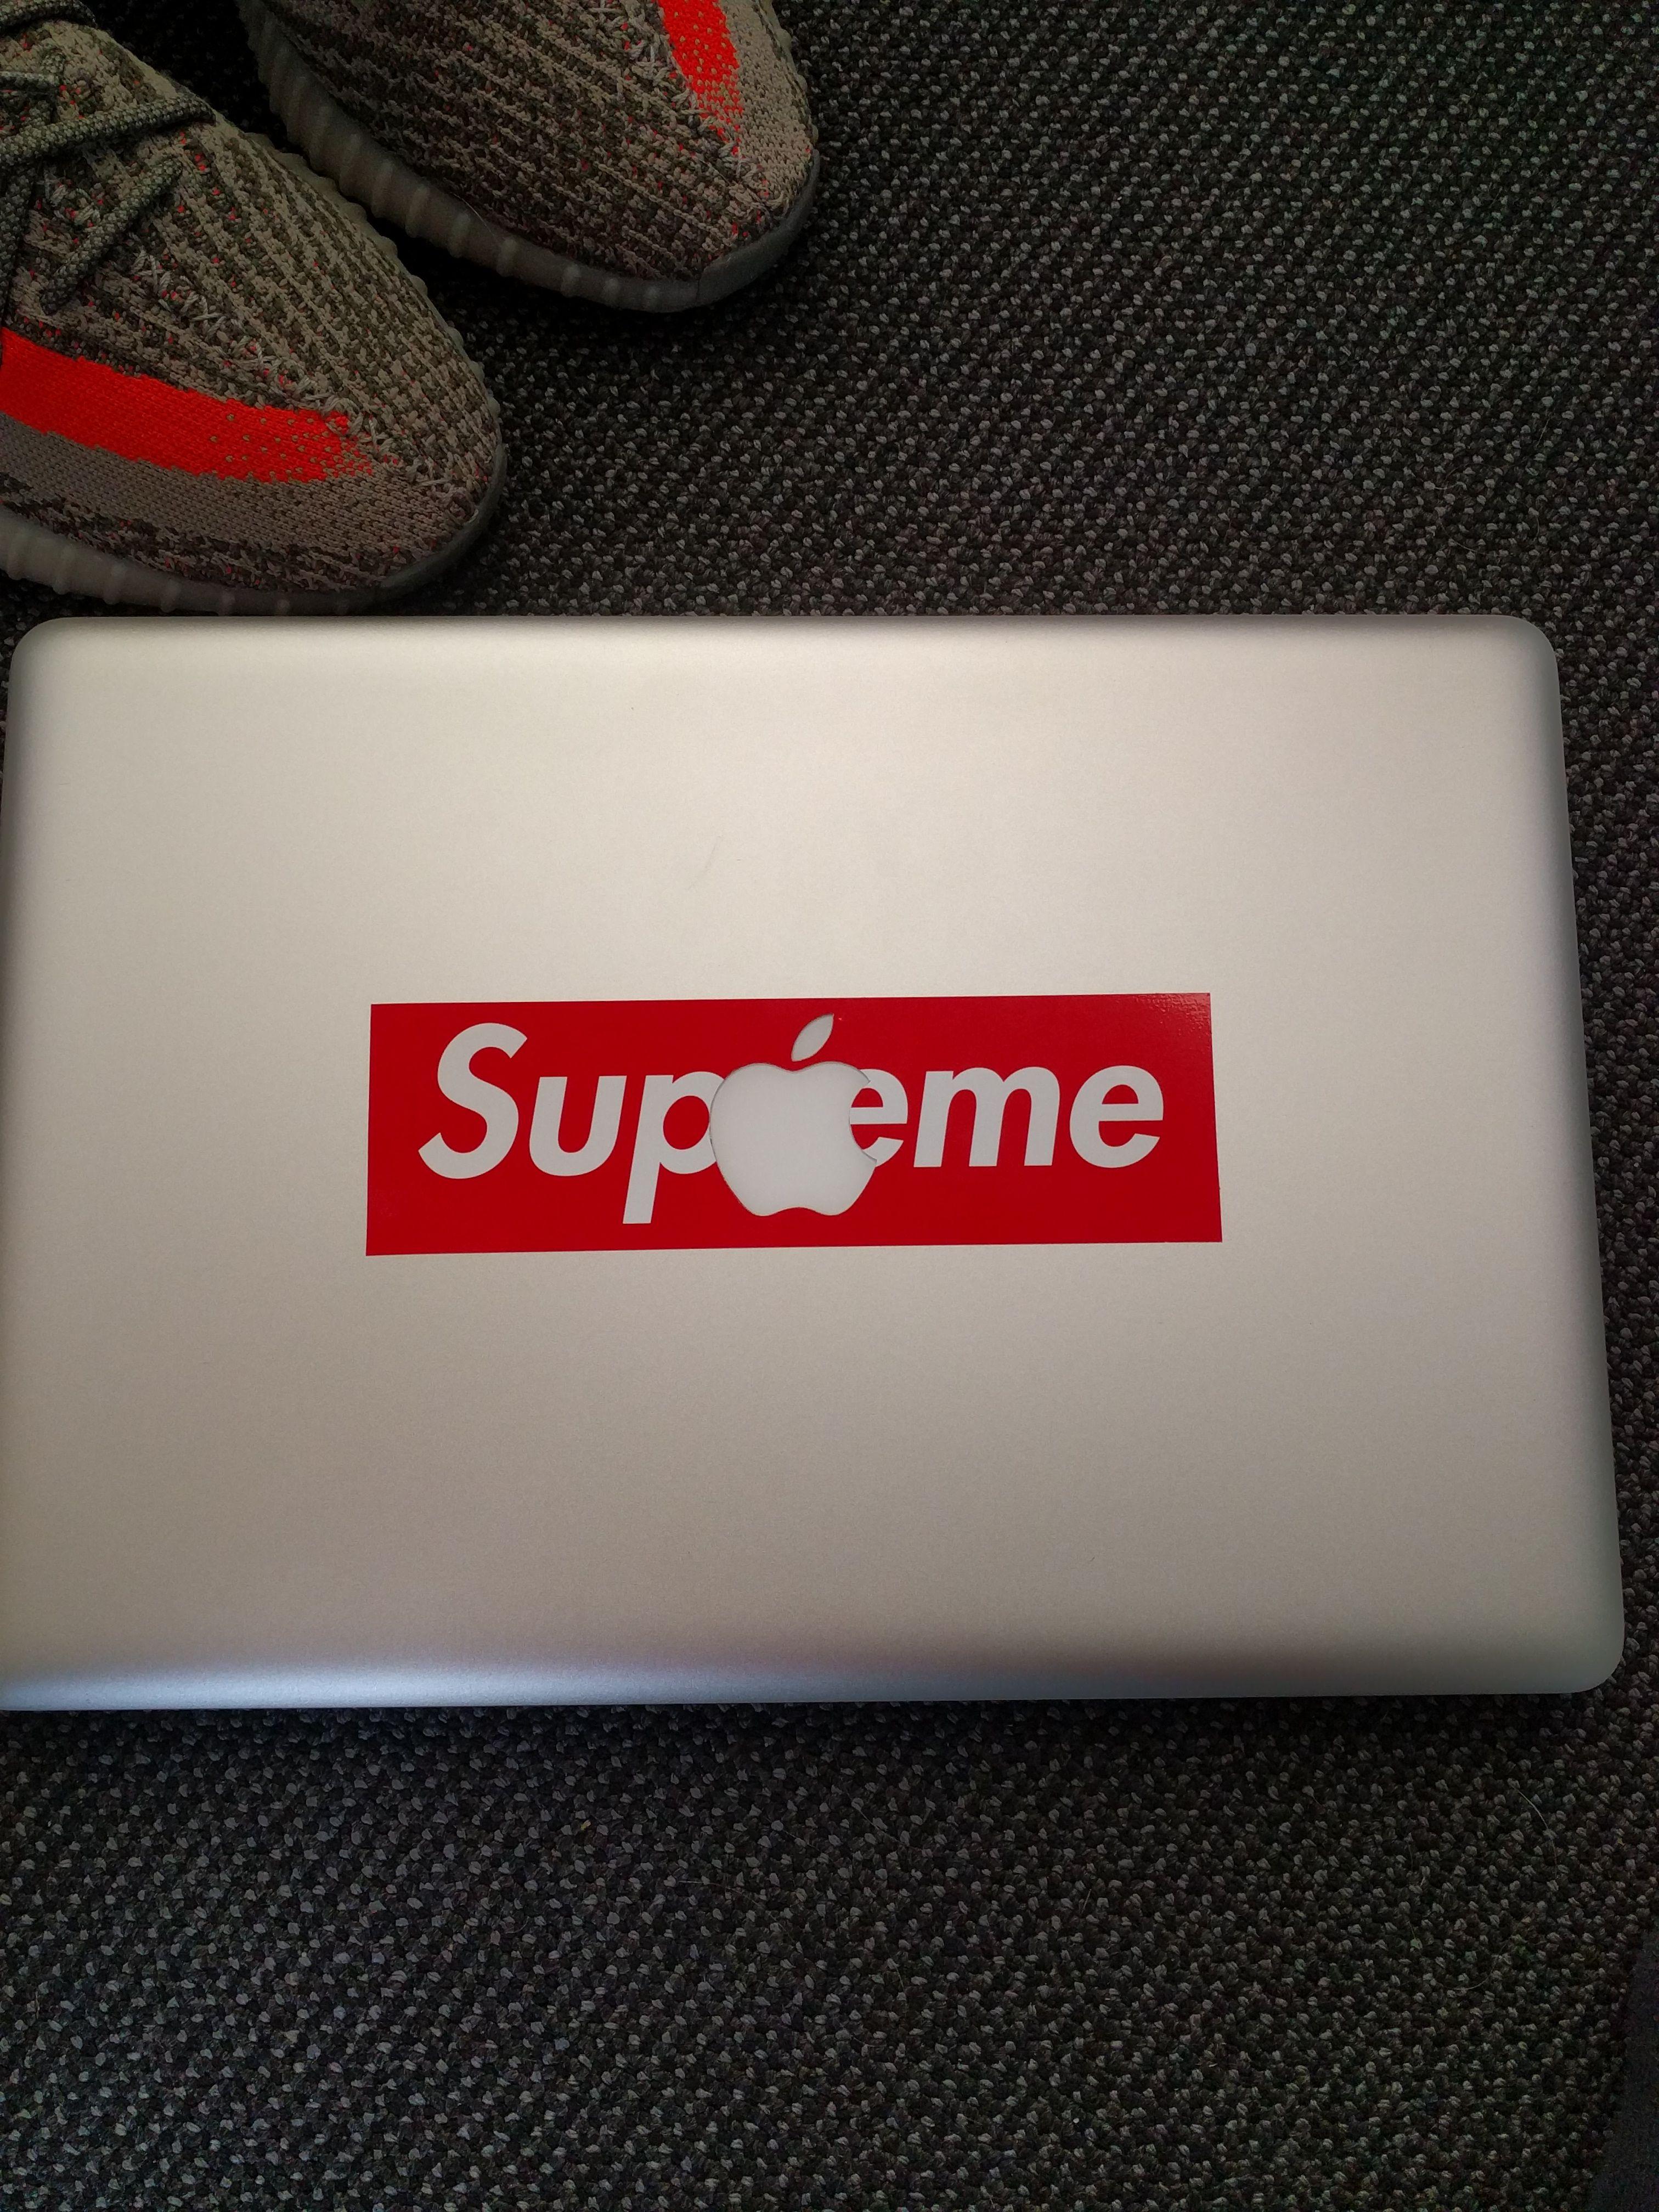 Supreme Apple Logo - Put my supreme sticker to use - Album on Imgur